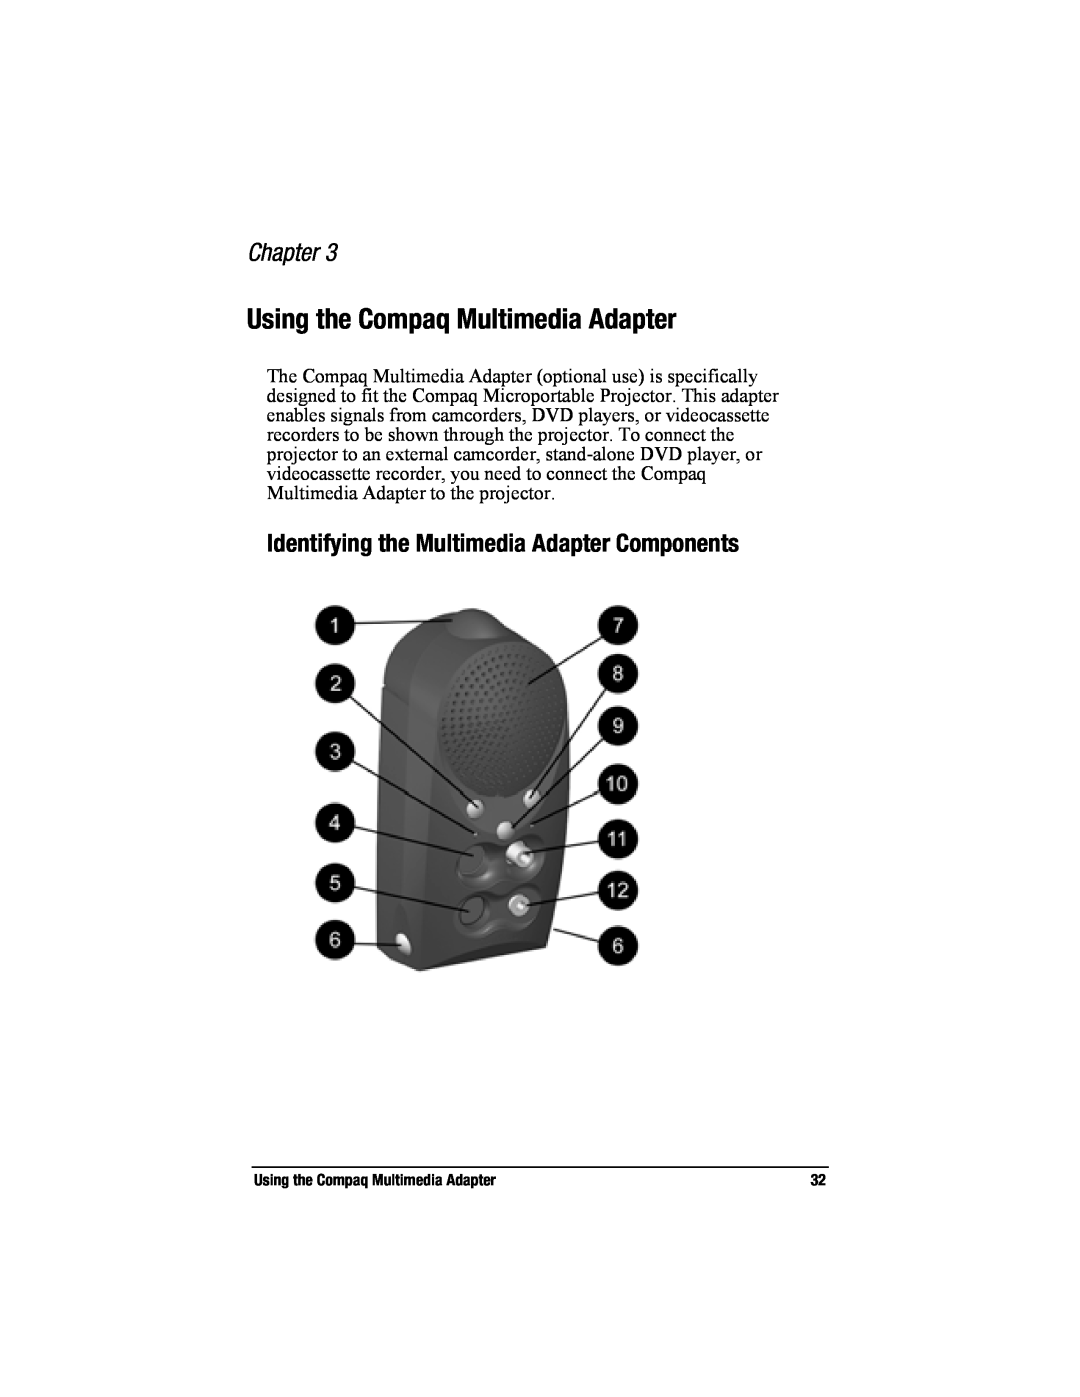 Compaq MP2800 warranty Using the Compaq Multimedia Adapter, Identifying the Multimedia Adapter Components, Chapter 